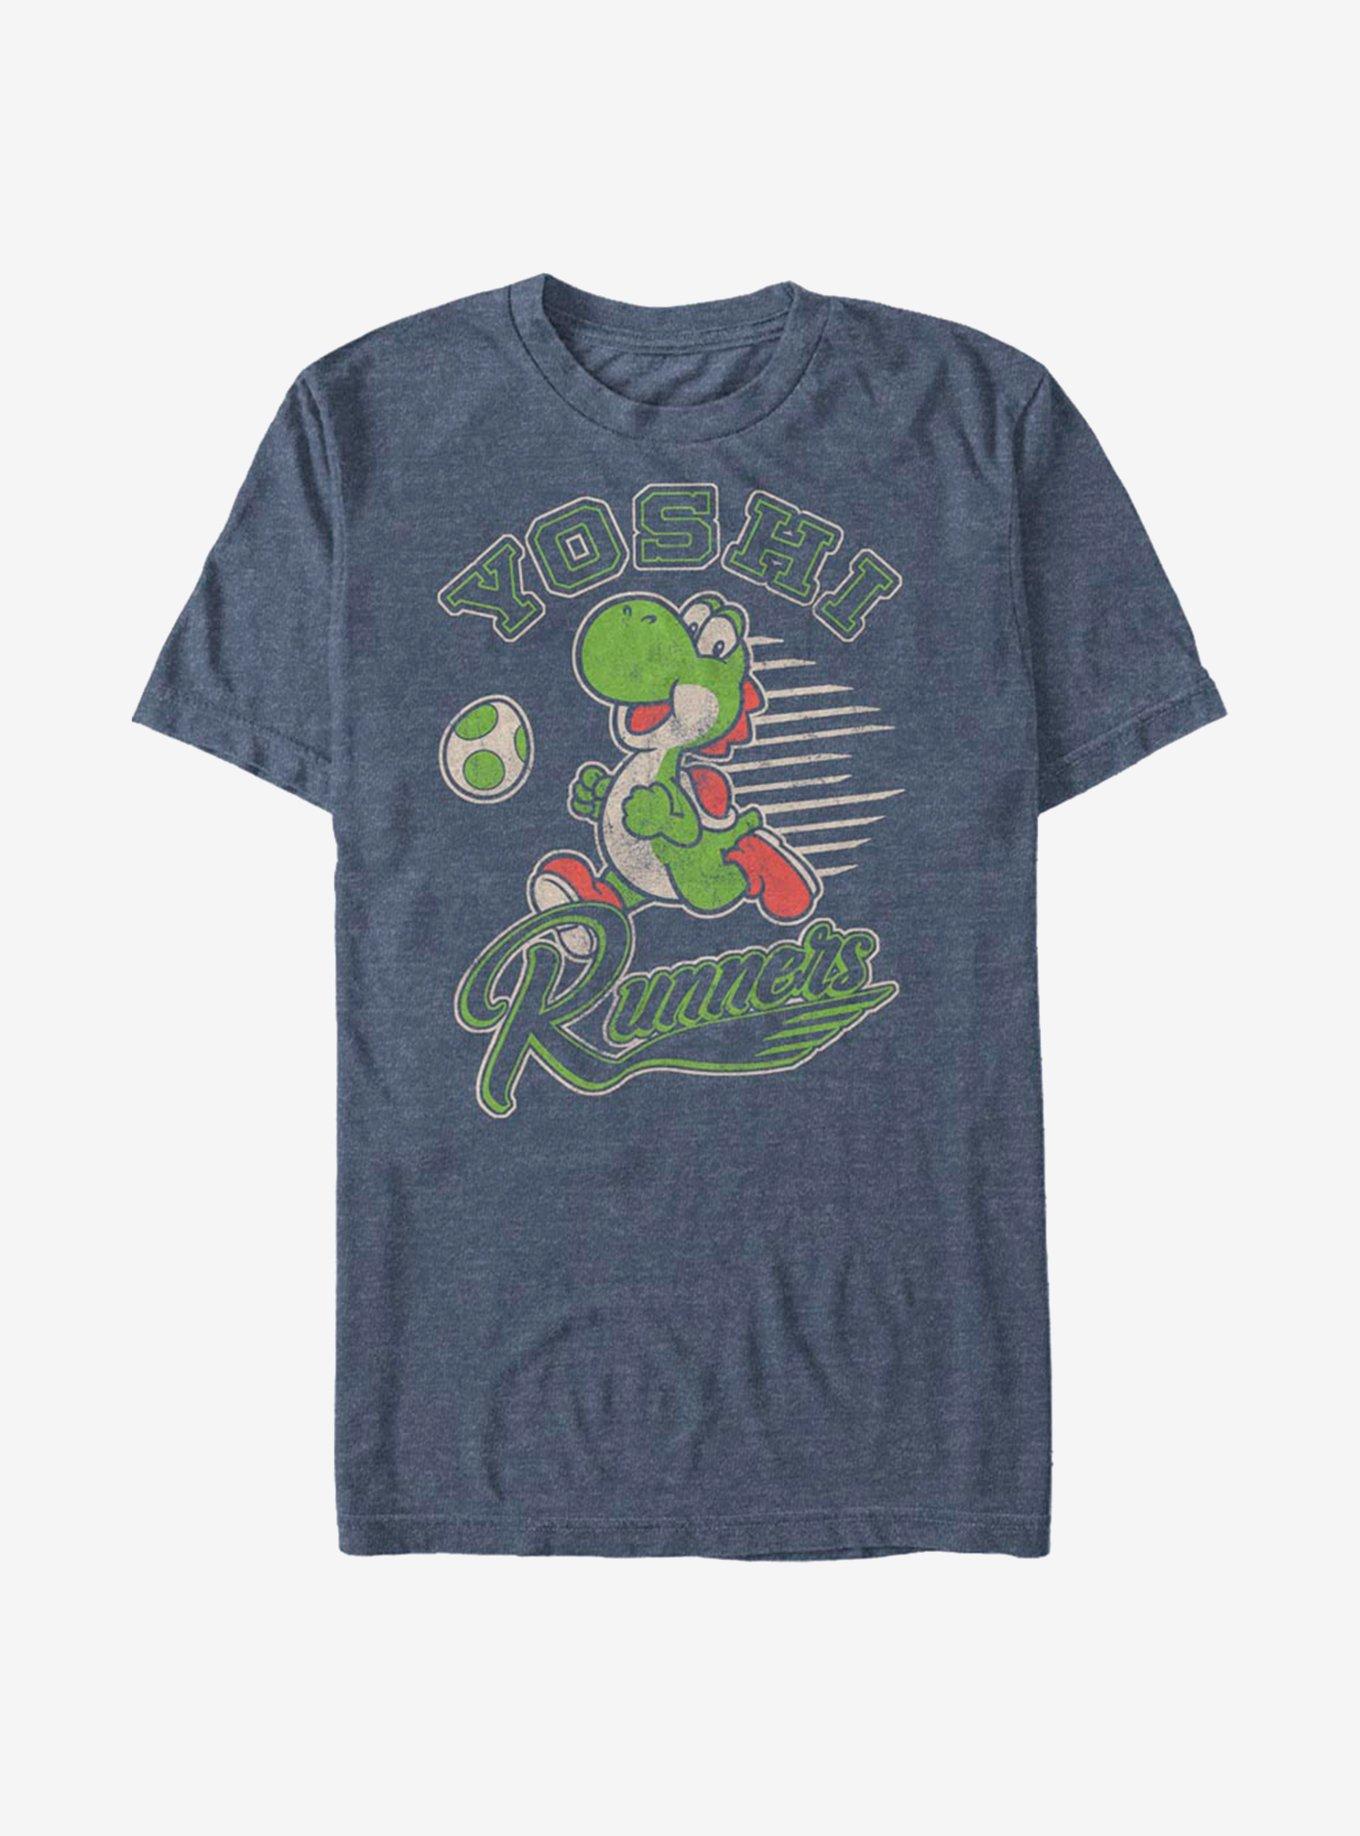 Super Mario Yoshi Runners T-Shirt